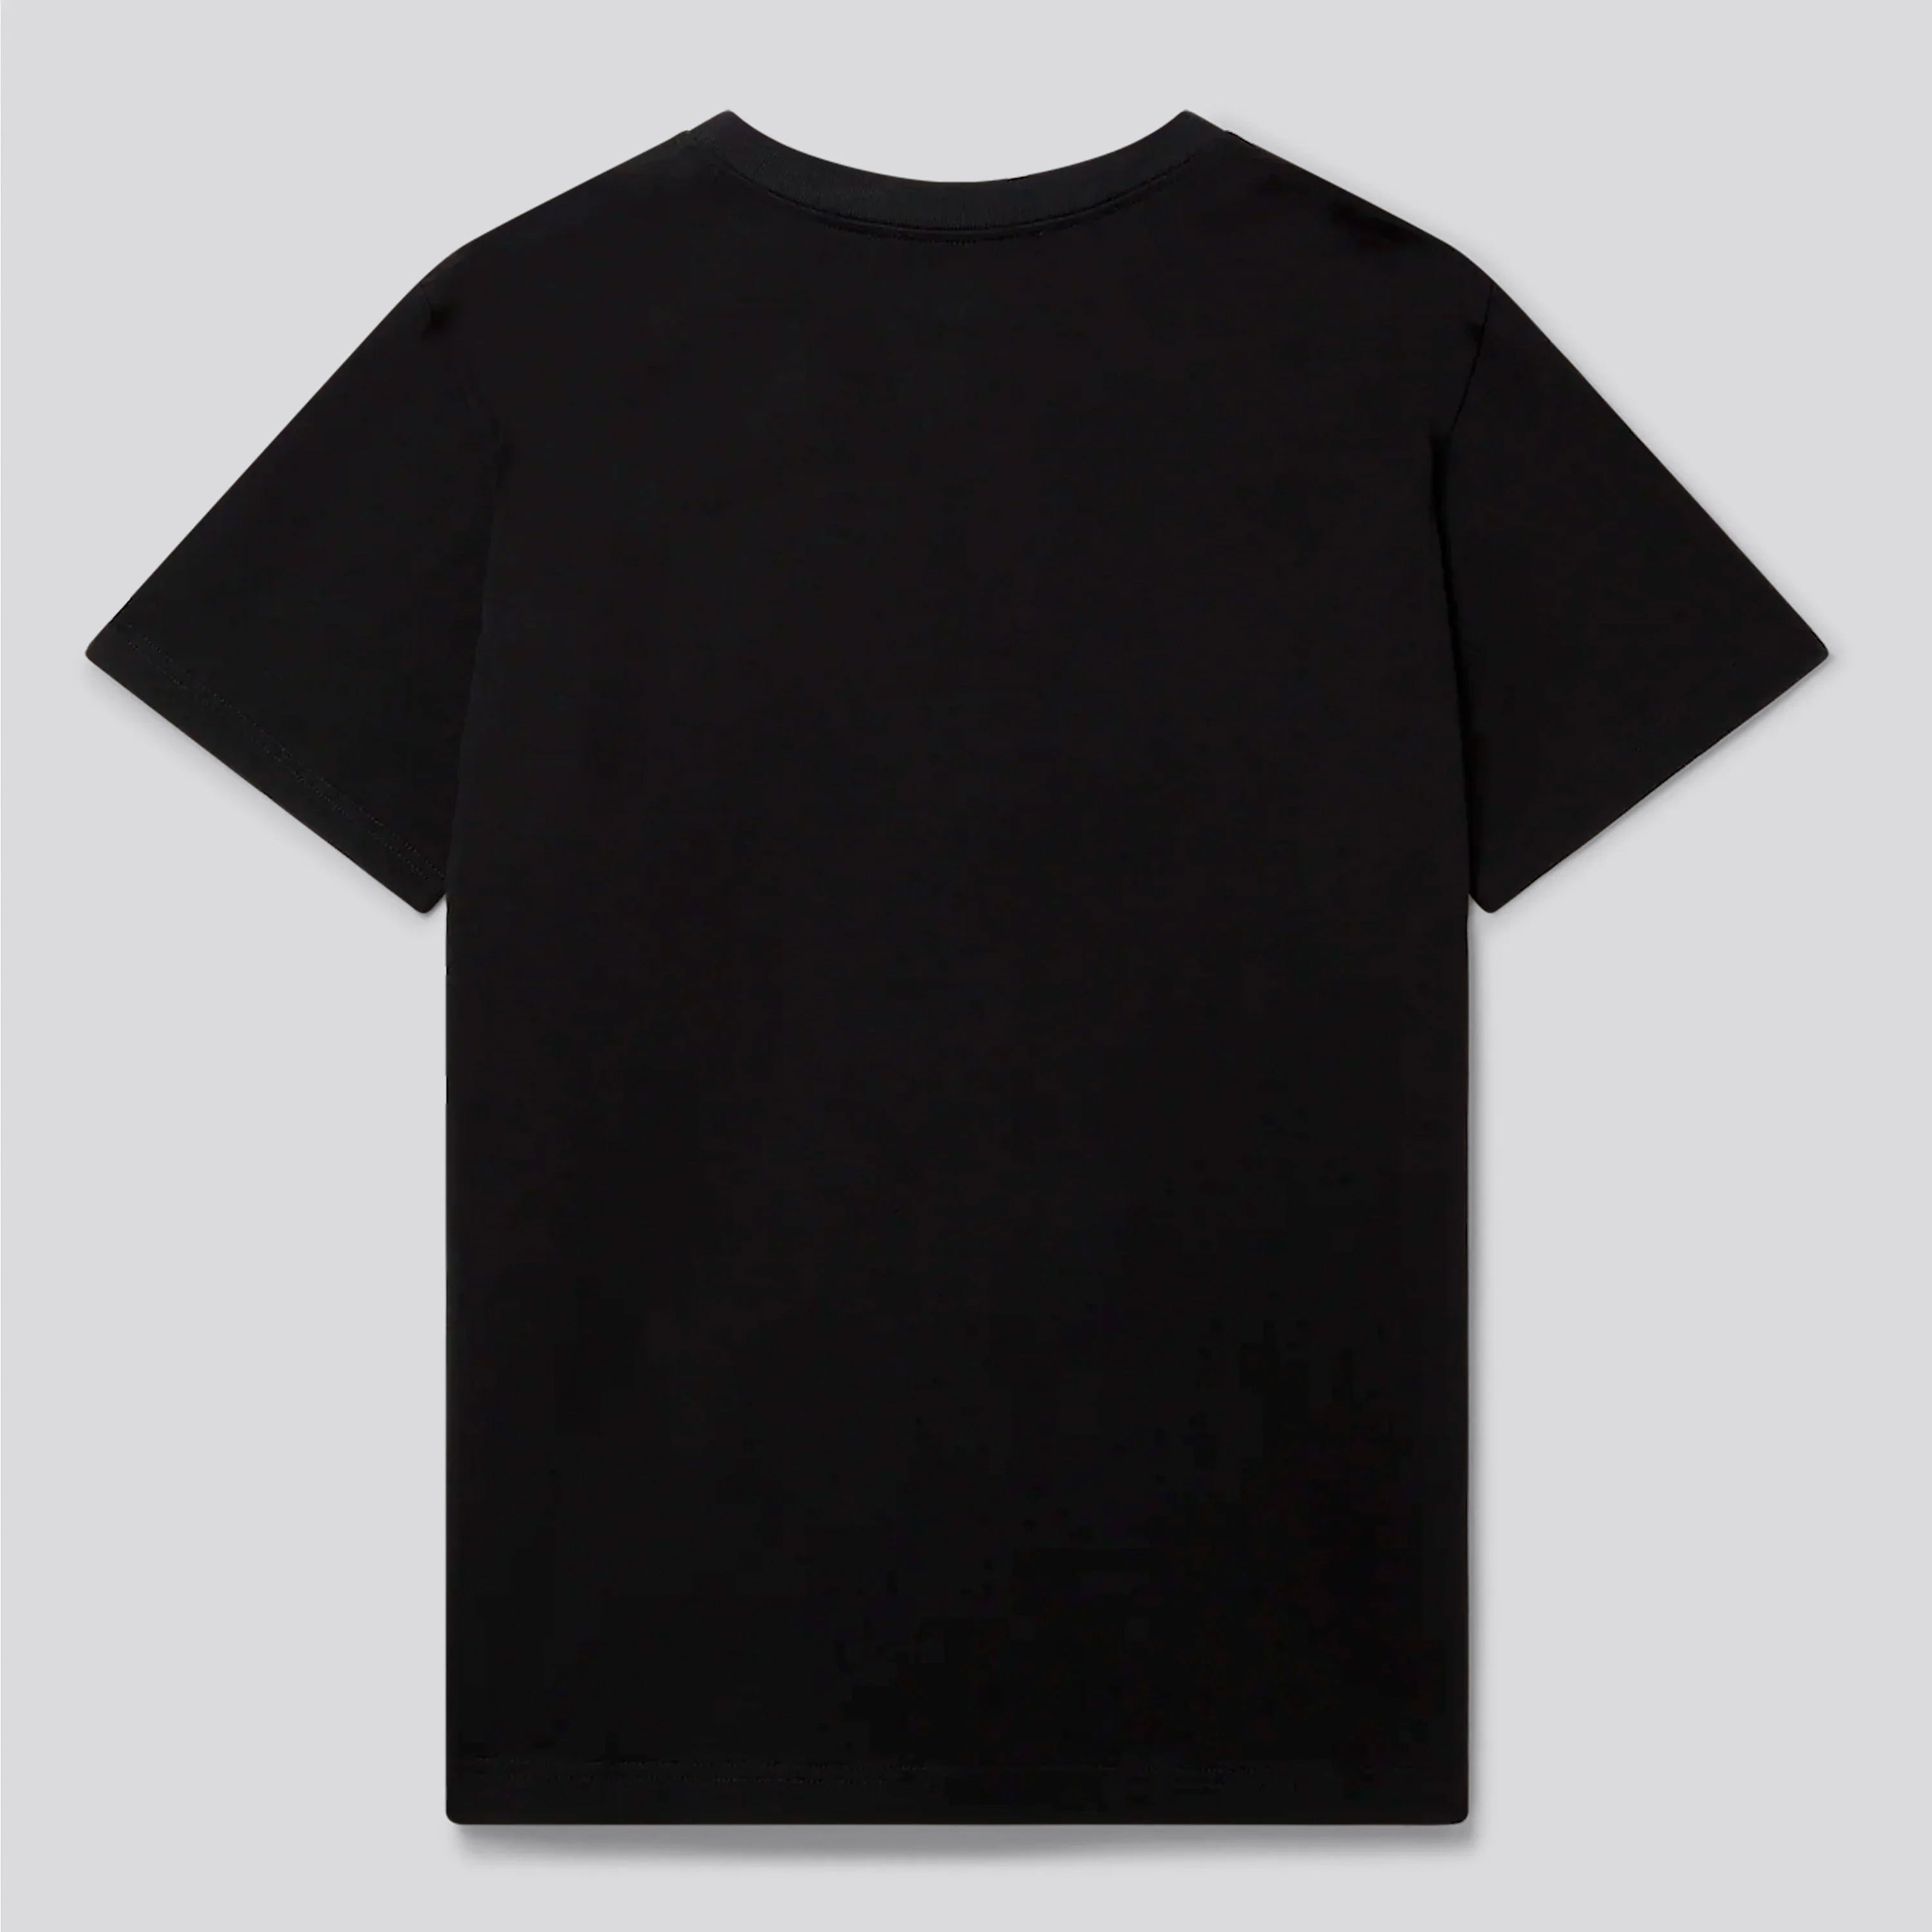 Camiseta negra